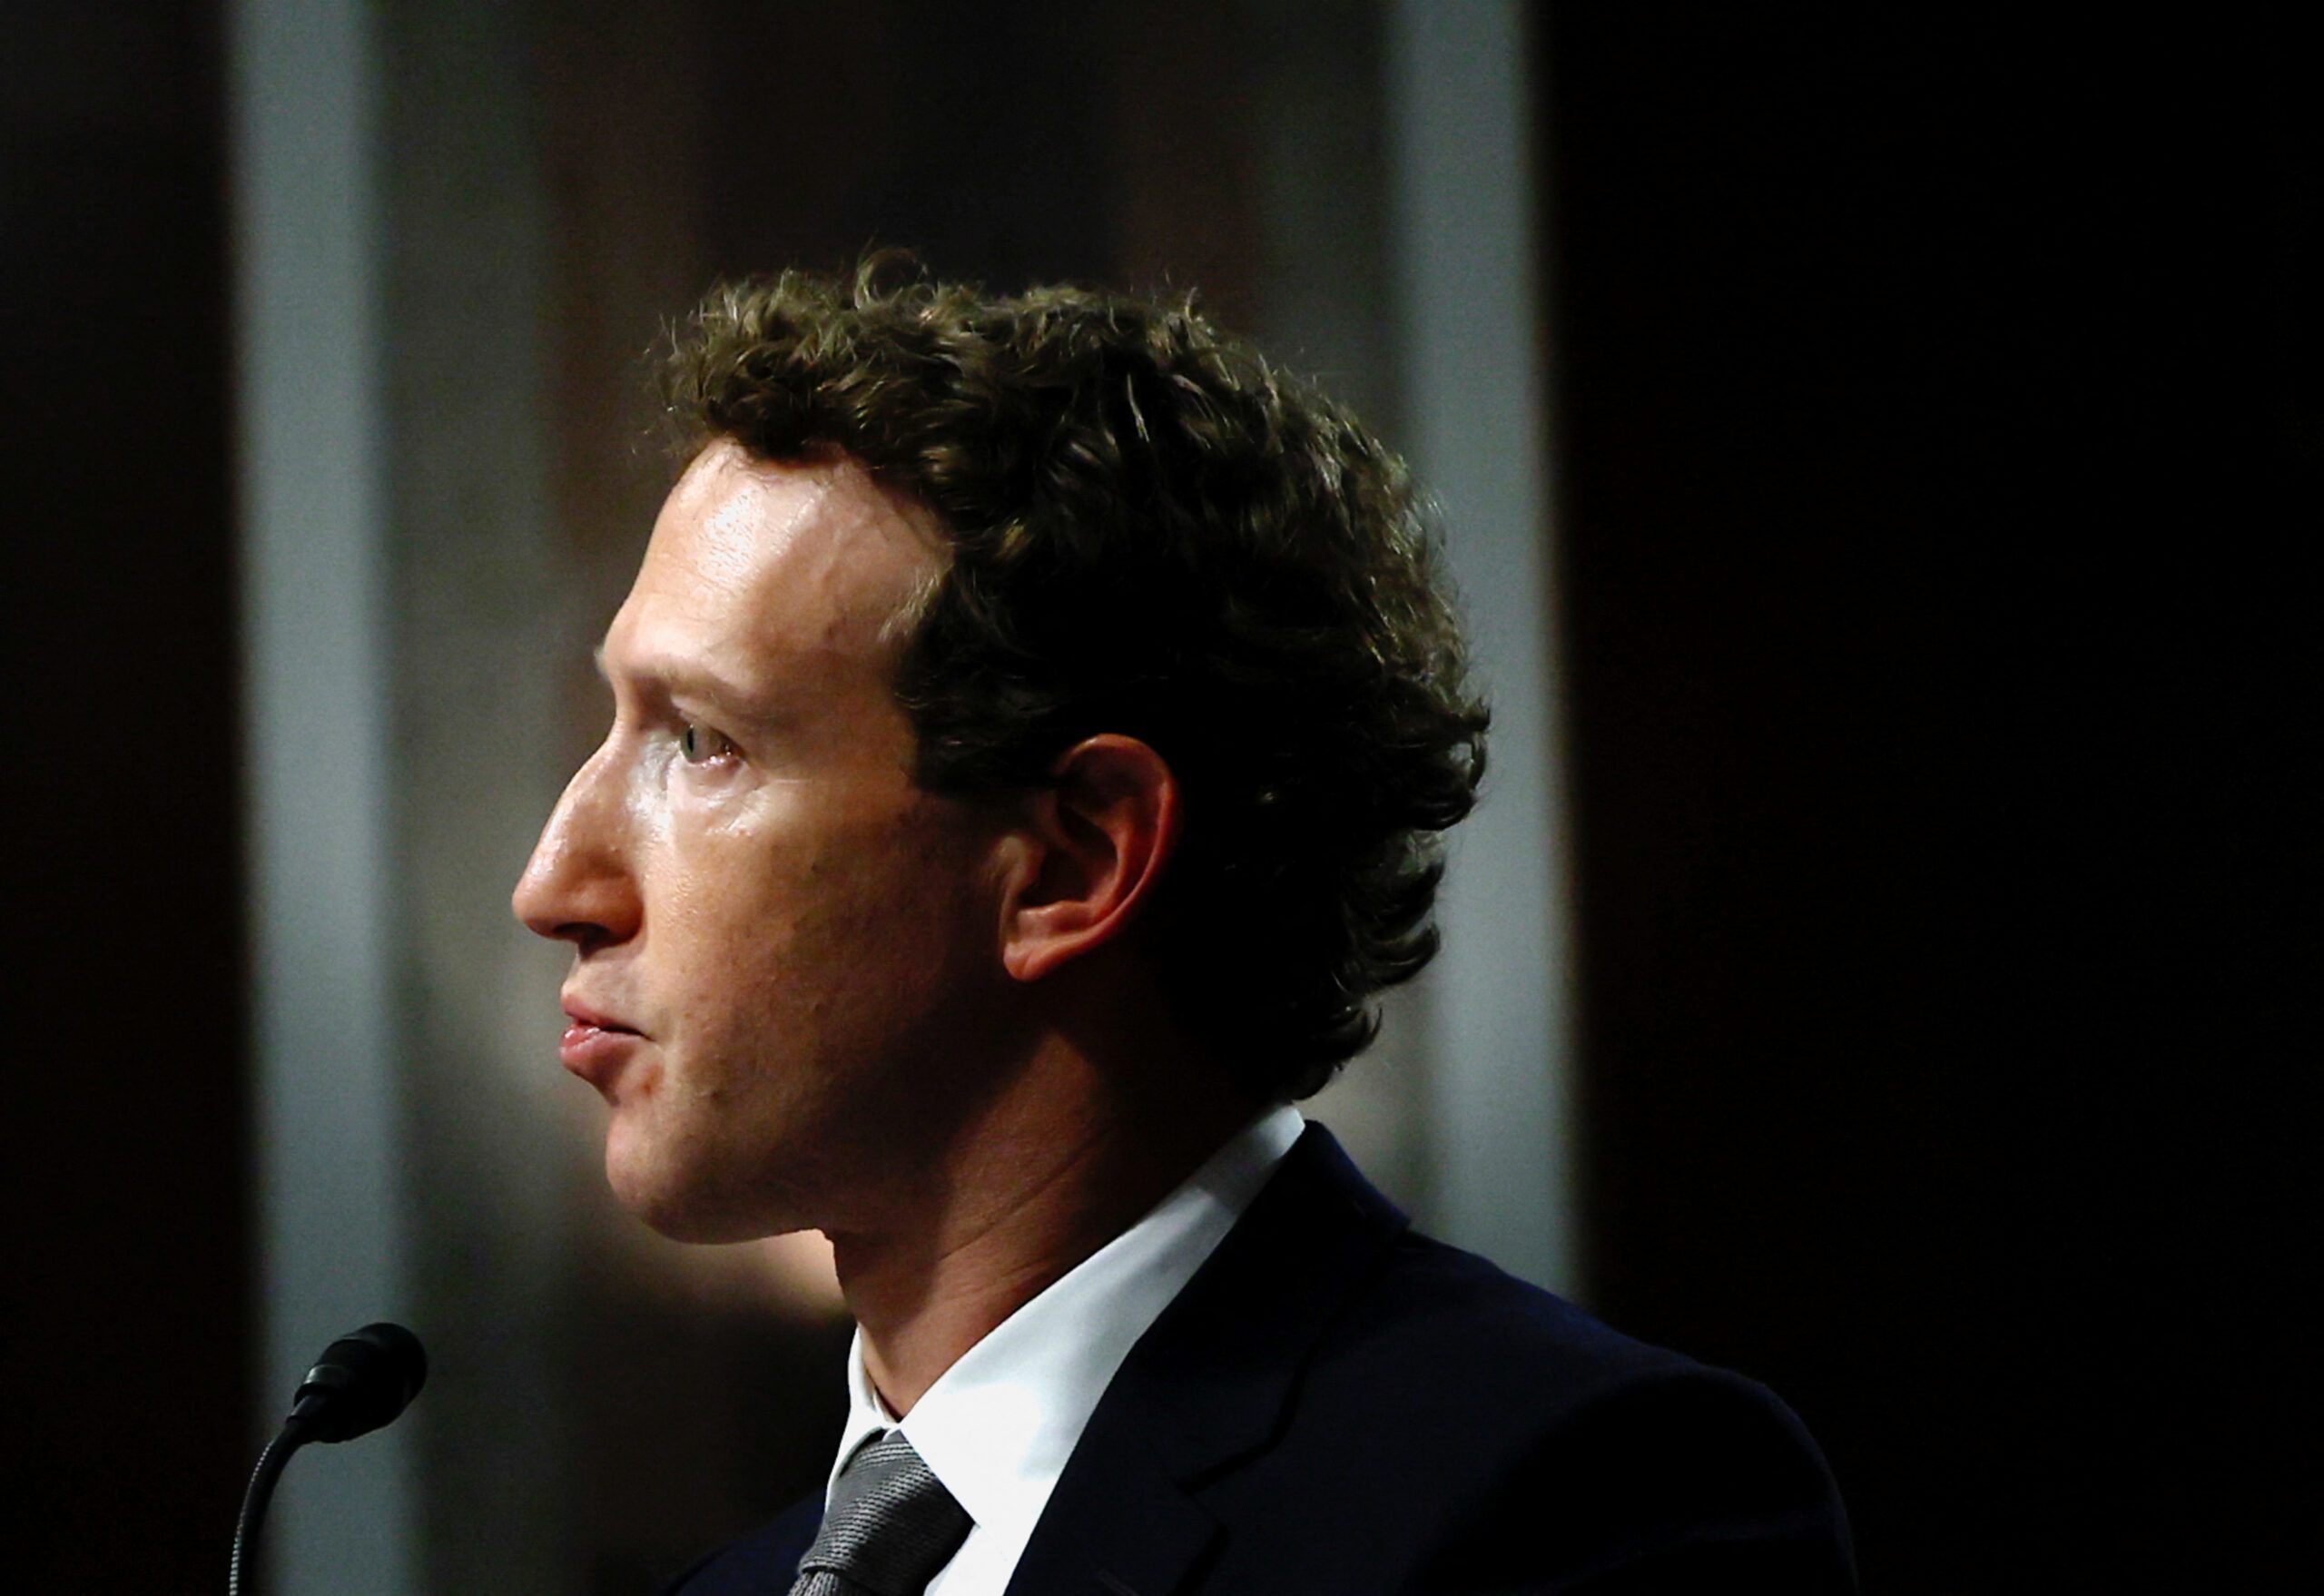 Zuckerberg told: Explain potential abuse content hidden behind Instagram ‘warning screen’